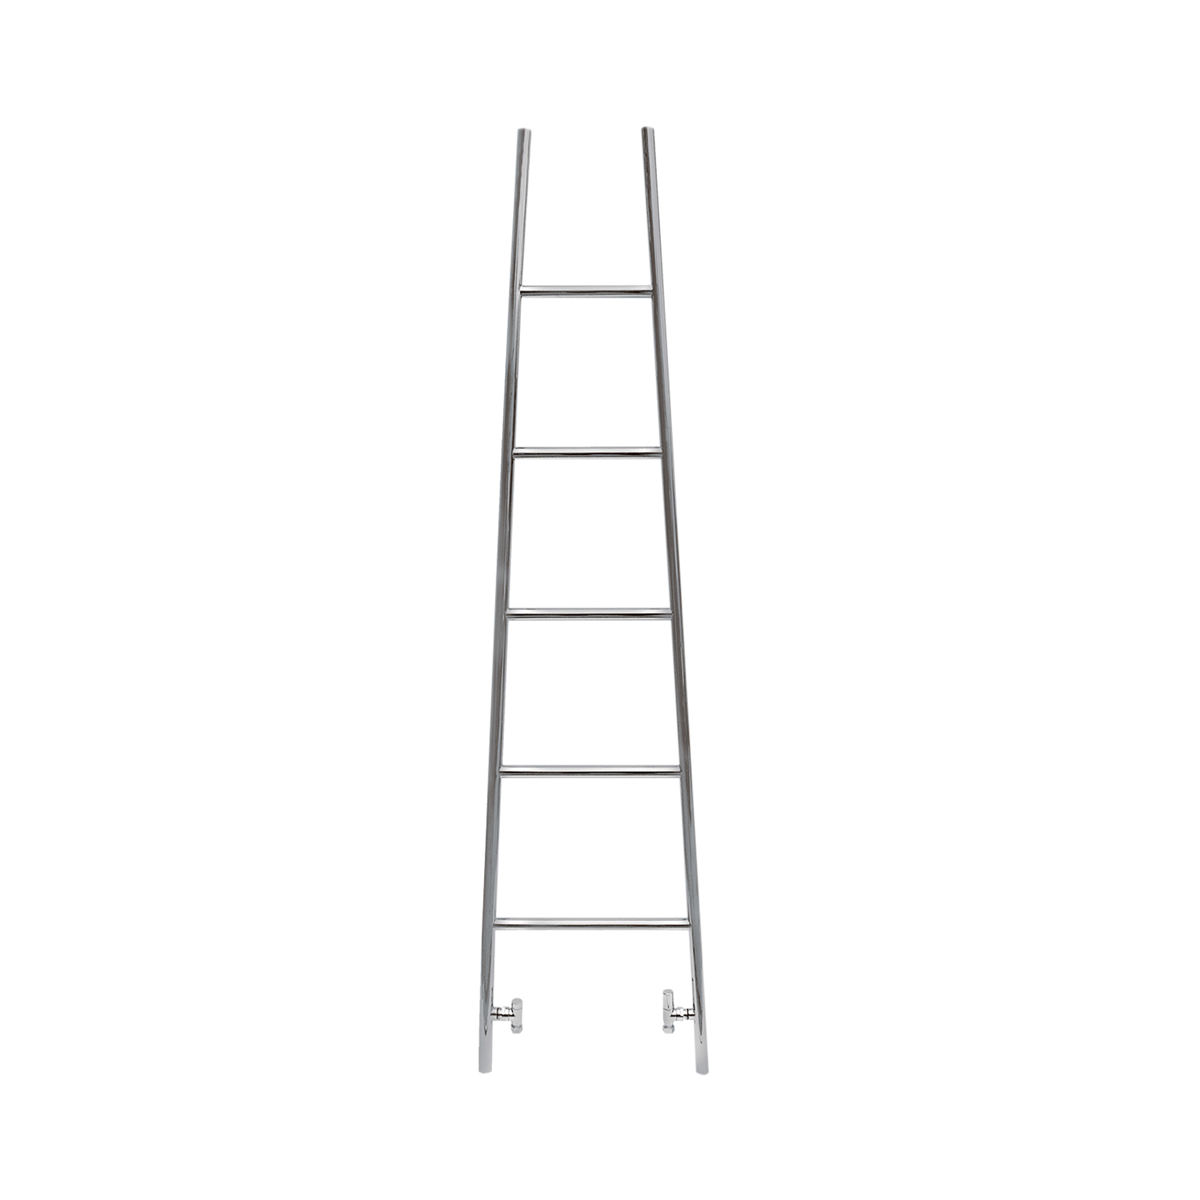 JIS RYE Leaning Ladder Rail